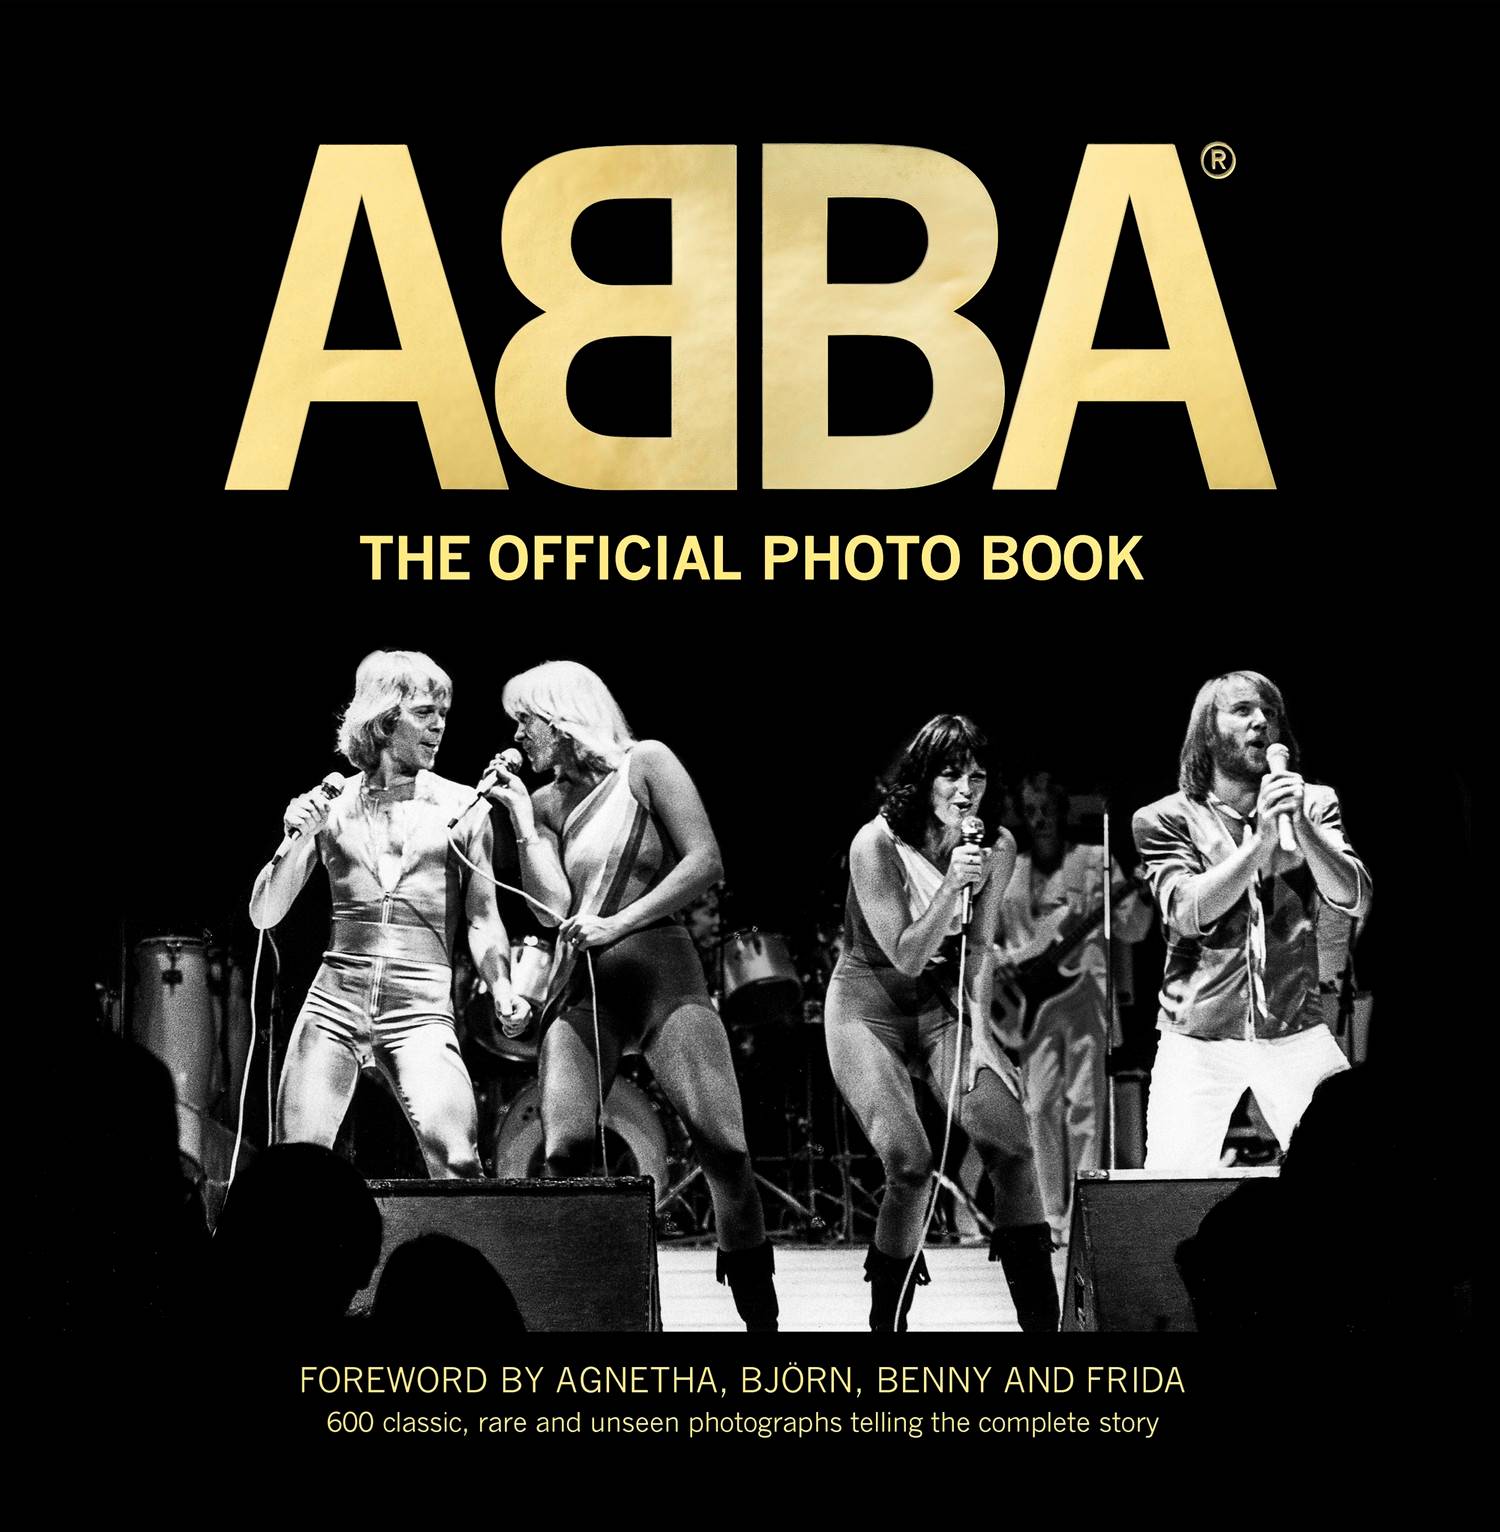 ABBA - The Official Photo Book